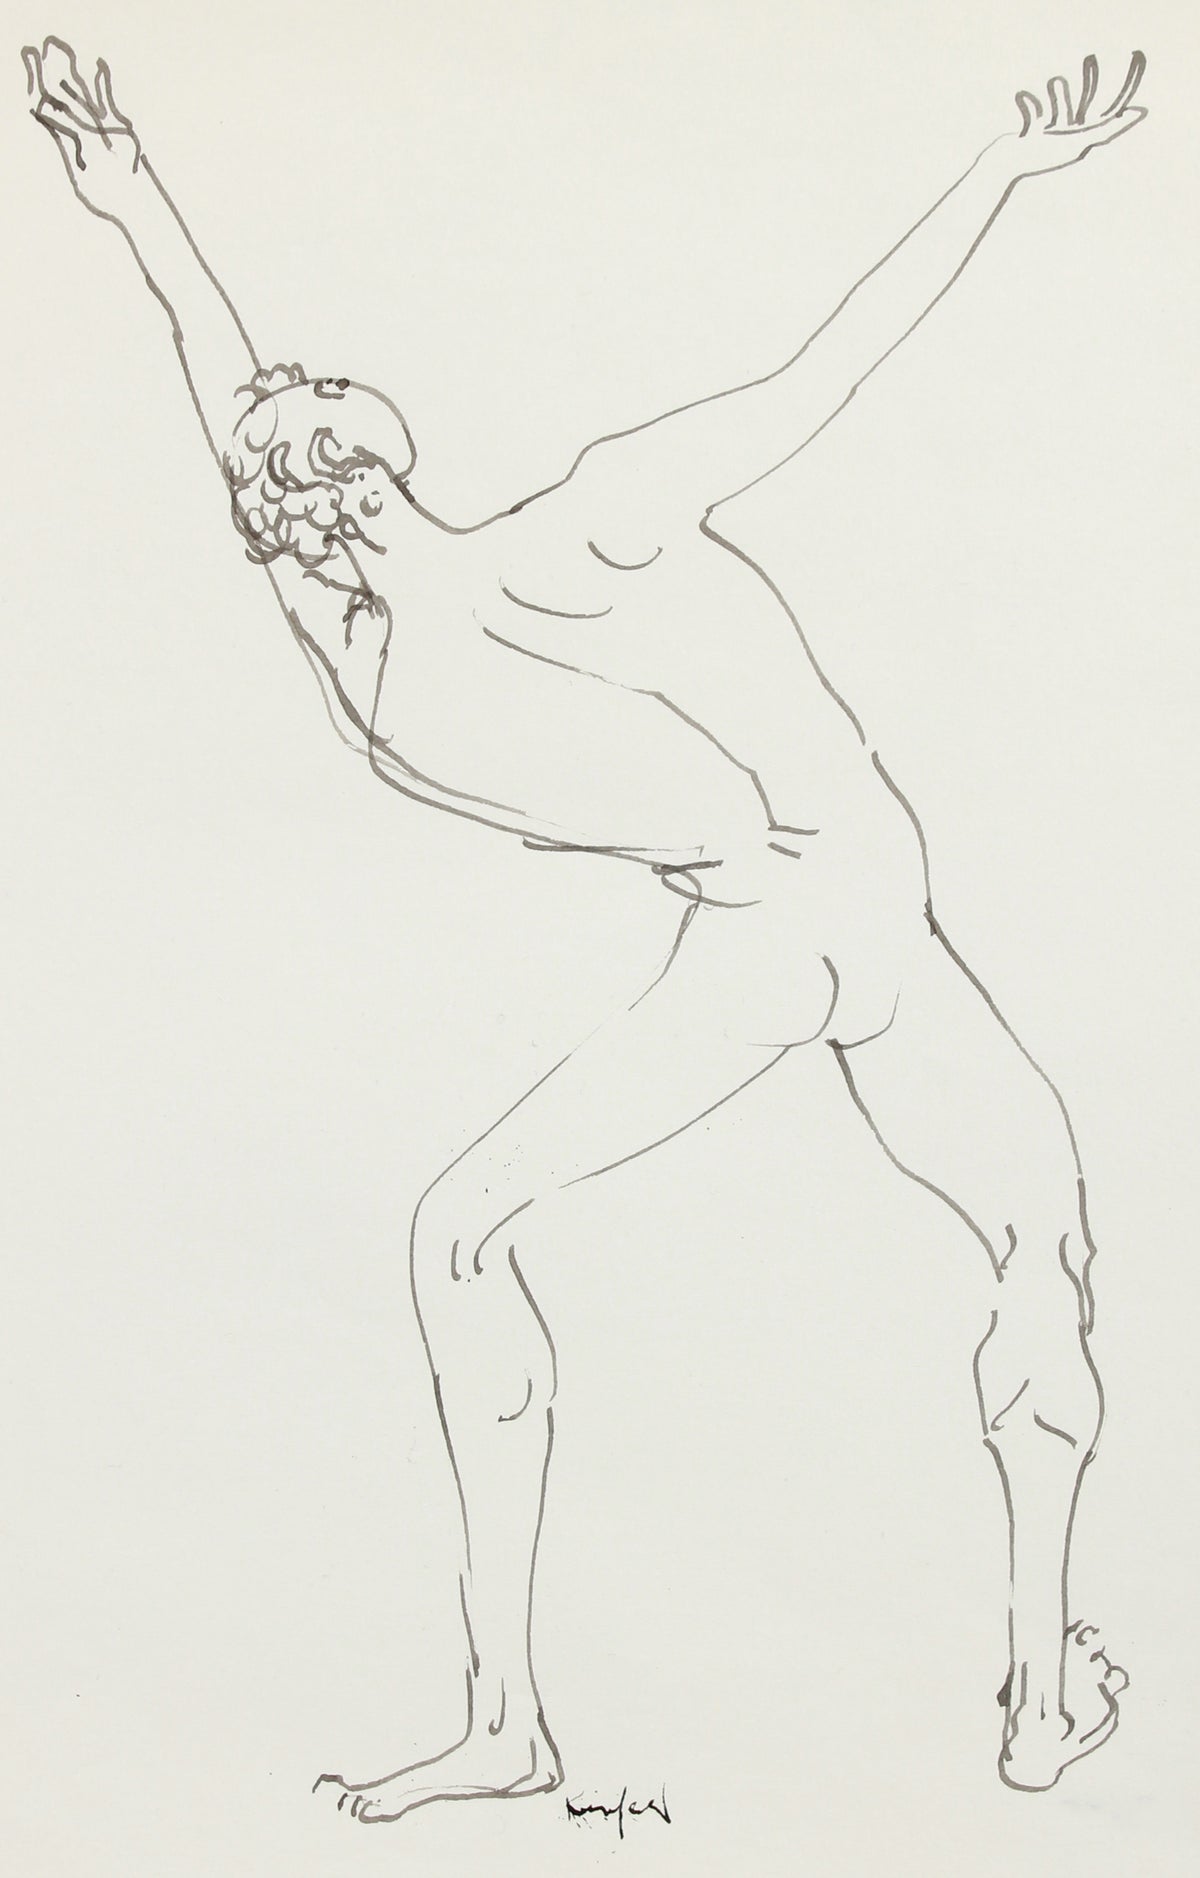 Reaching Male Nude &lt;br&gt;1960-80s Ink &lt;br&gt;&lt;br&gt;#A8206